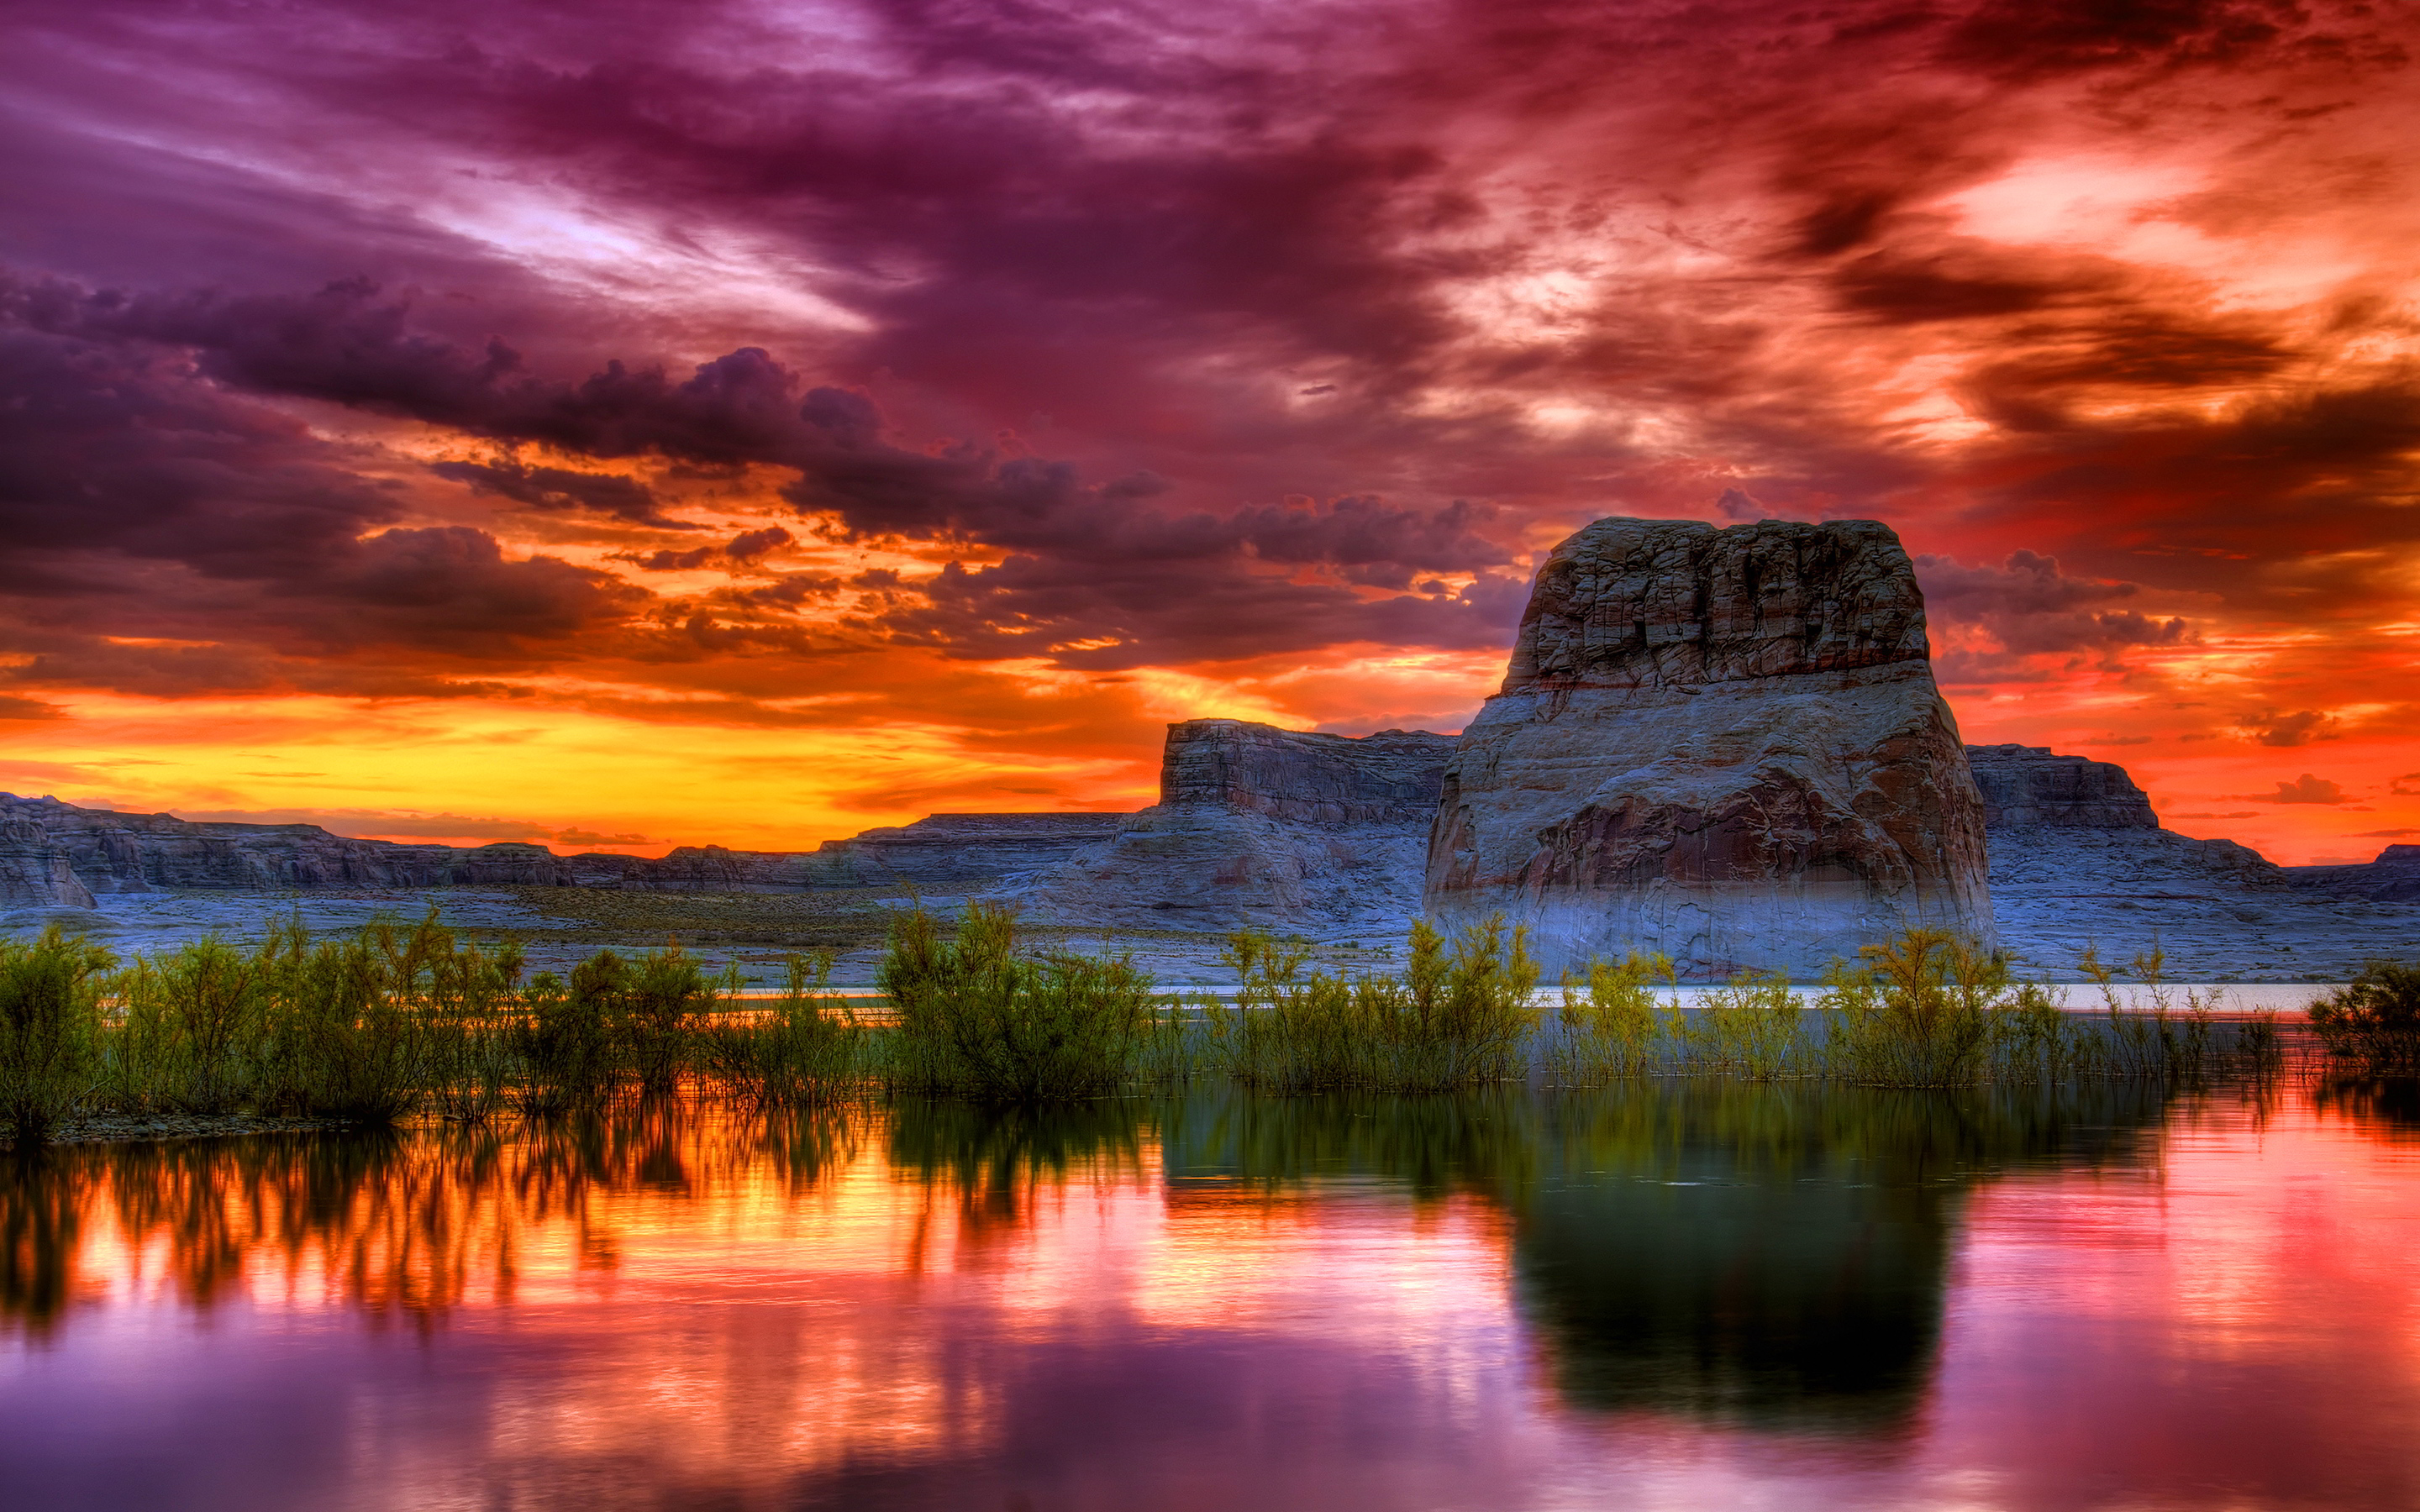 sunset images scenery - HD Desktop Wallpapers | 4k HD